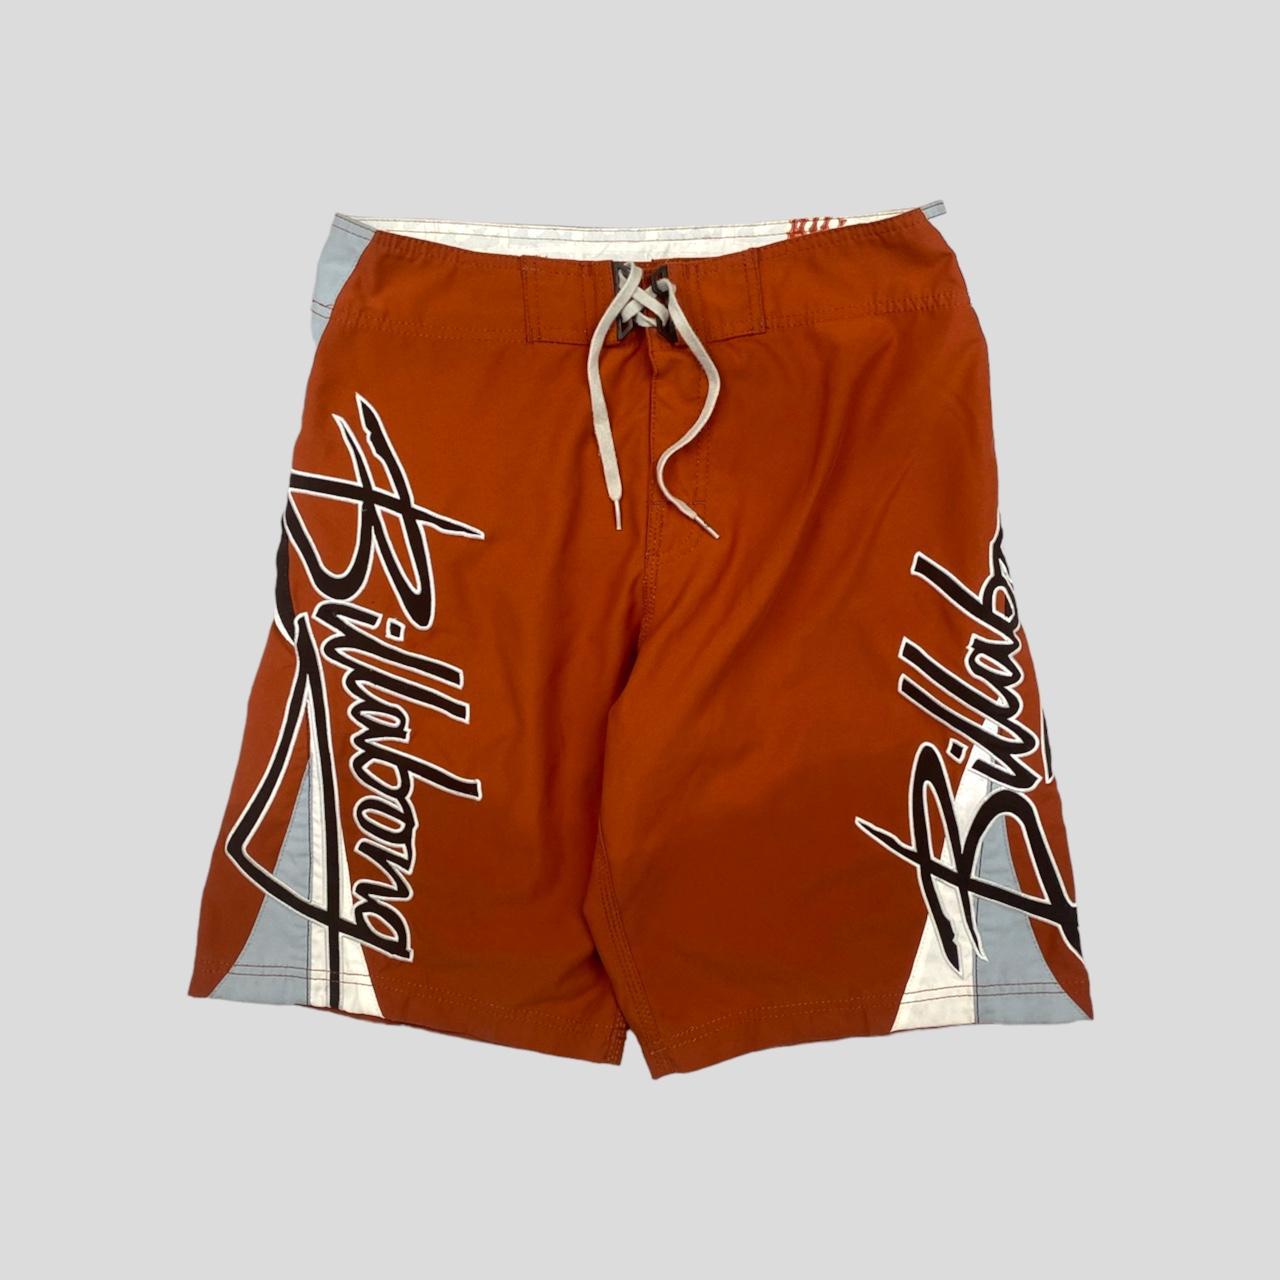 Billabong Men's Orange and White Shorts | Depop